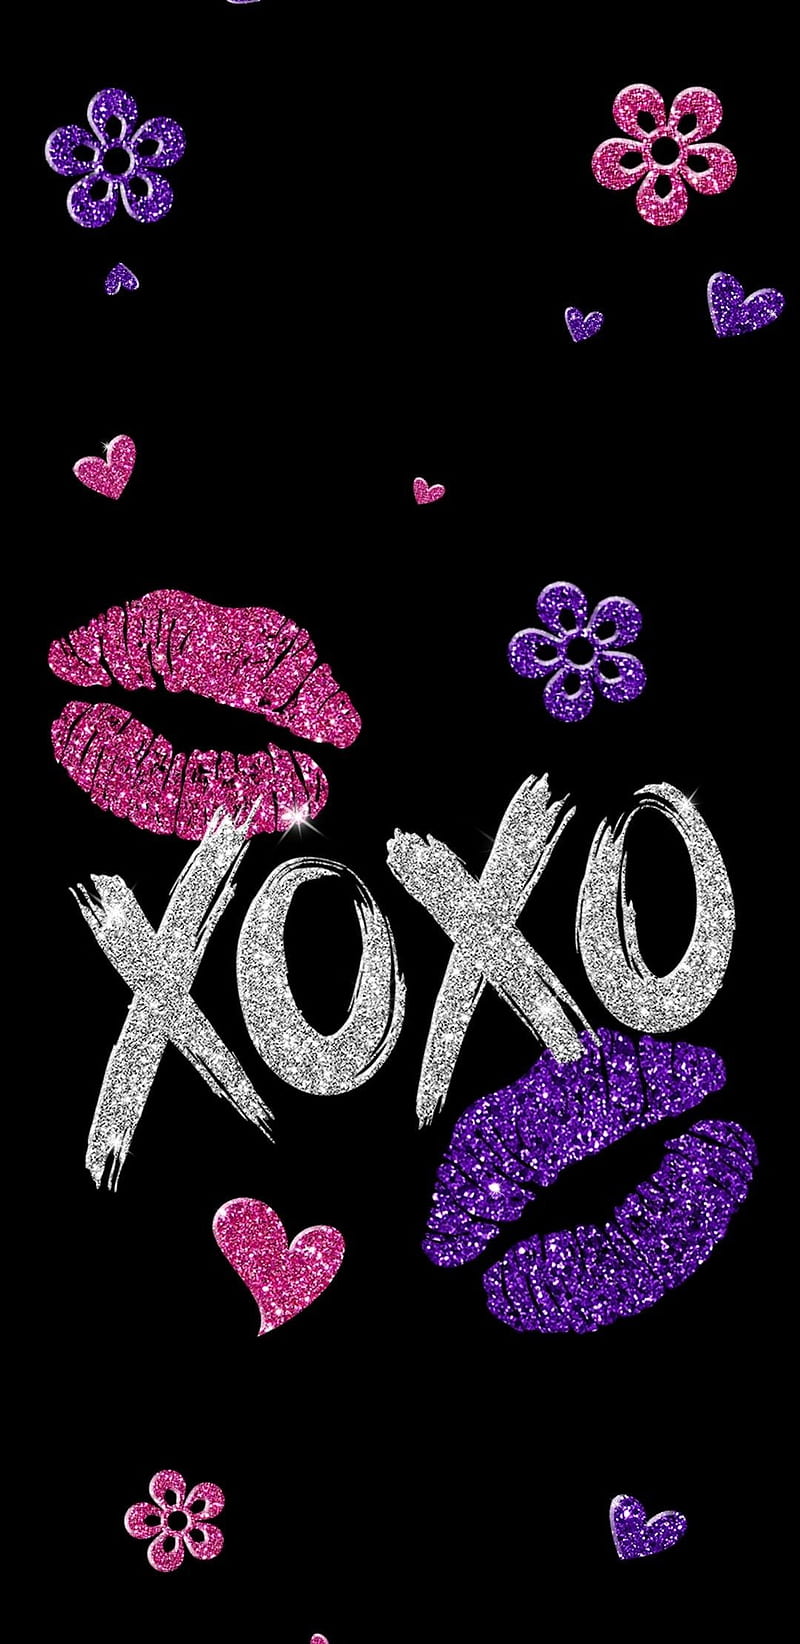 Xoxo Girly Glitter Corazones Kiss Kisses Love Pink Pretty